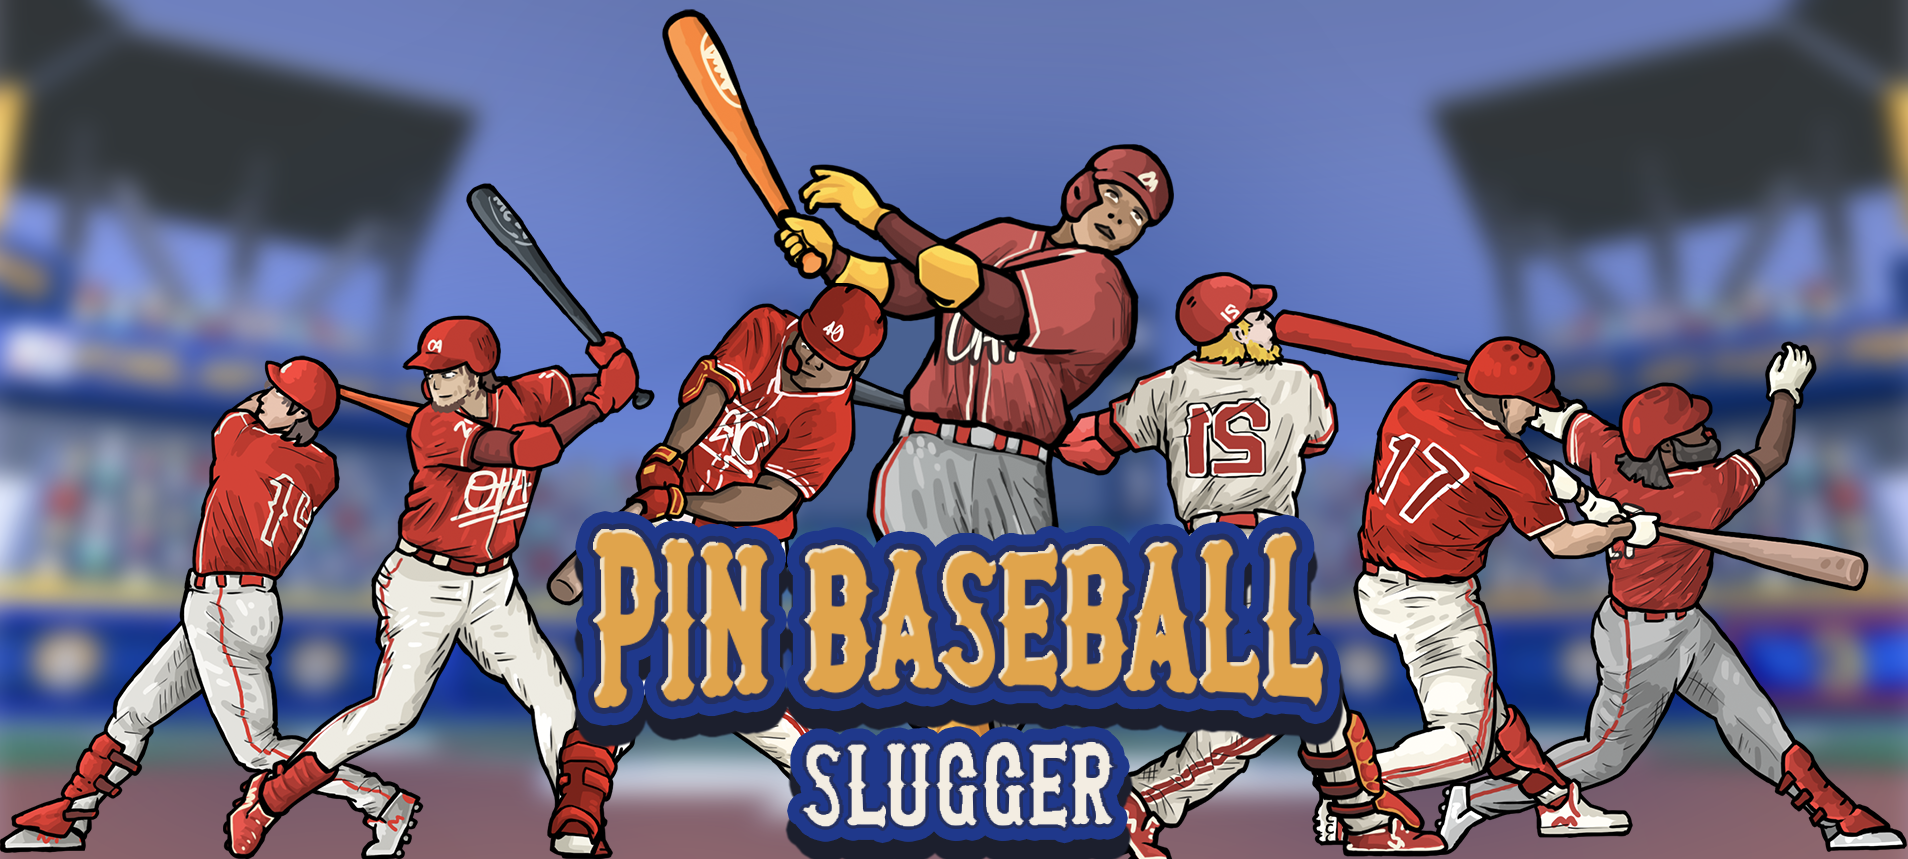 Screenshot 1 of Pin jogos de beisebol - slugger 2.0.0